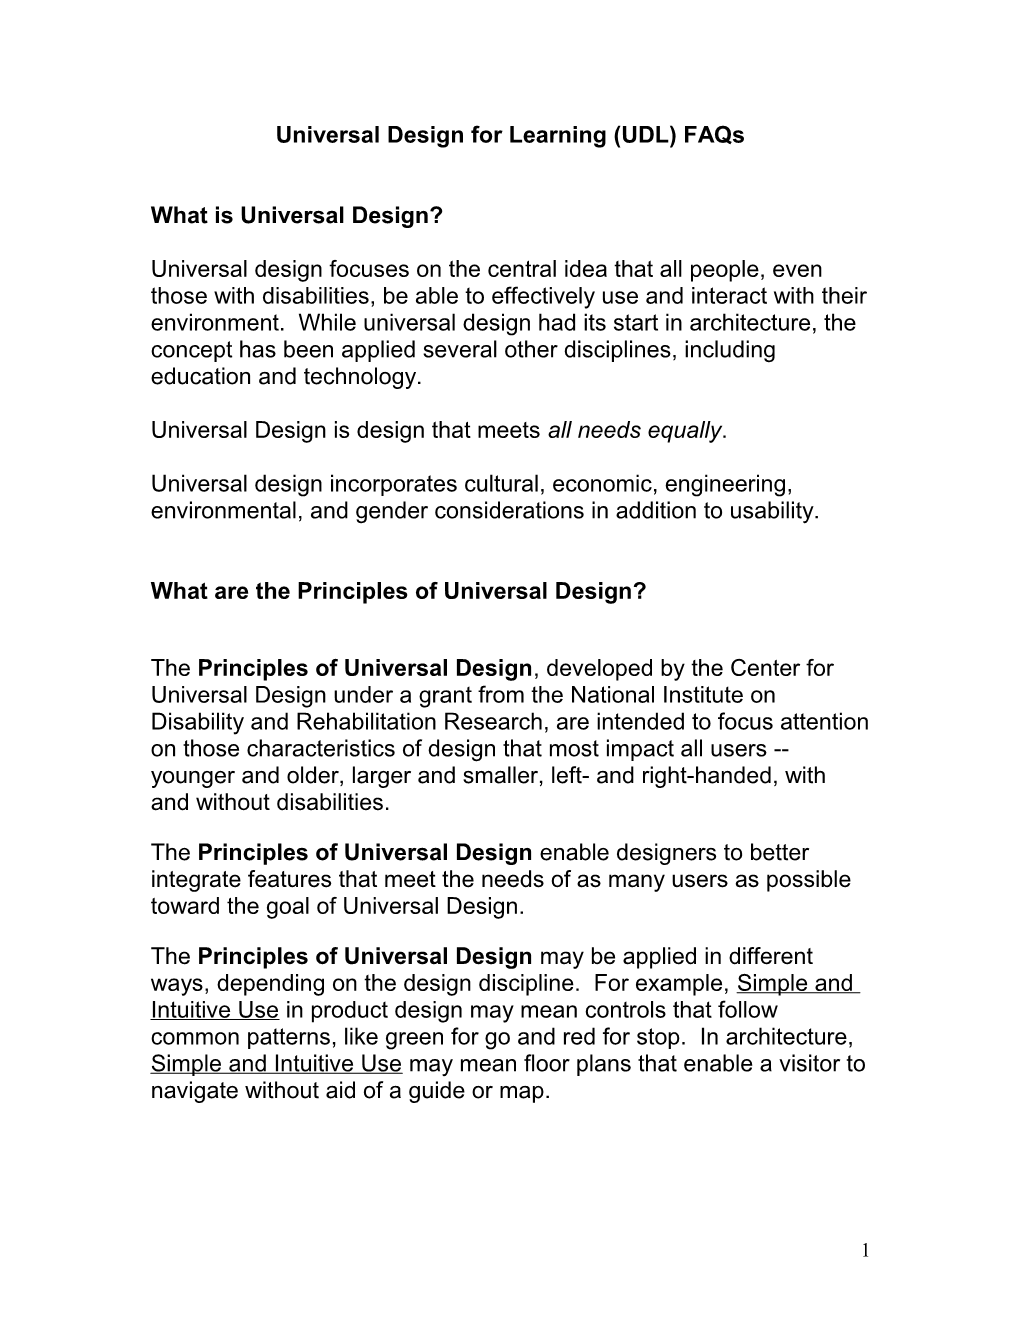 Universal Design for Learning (UDL)